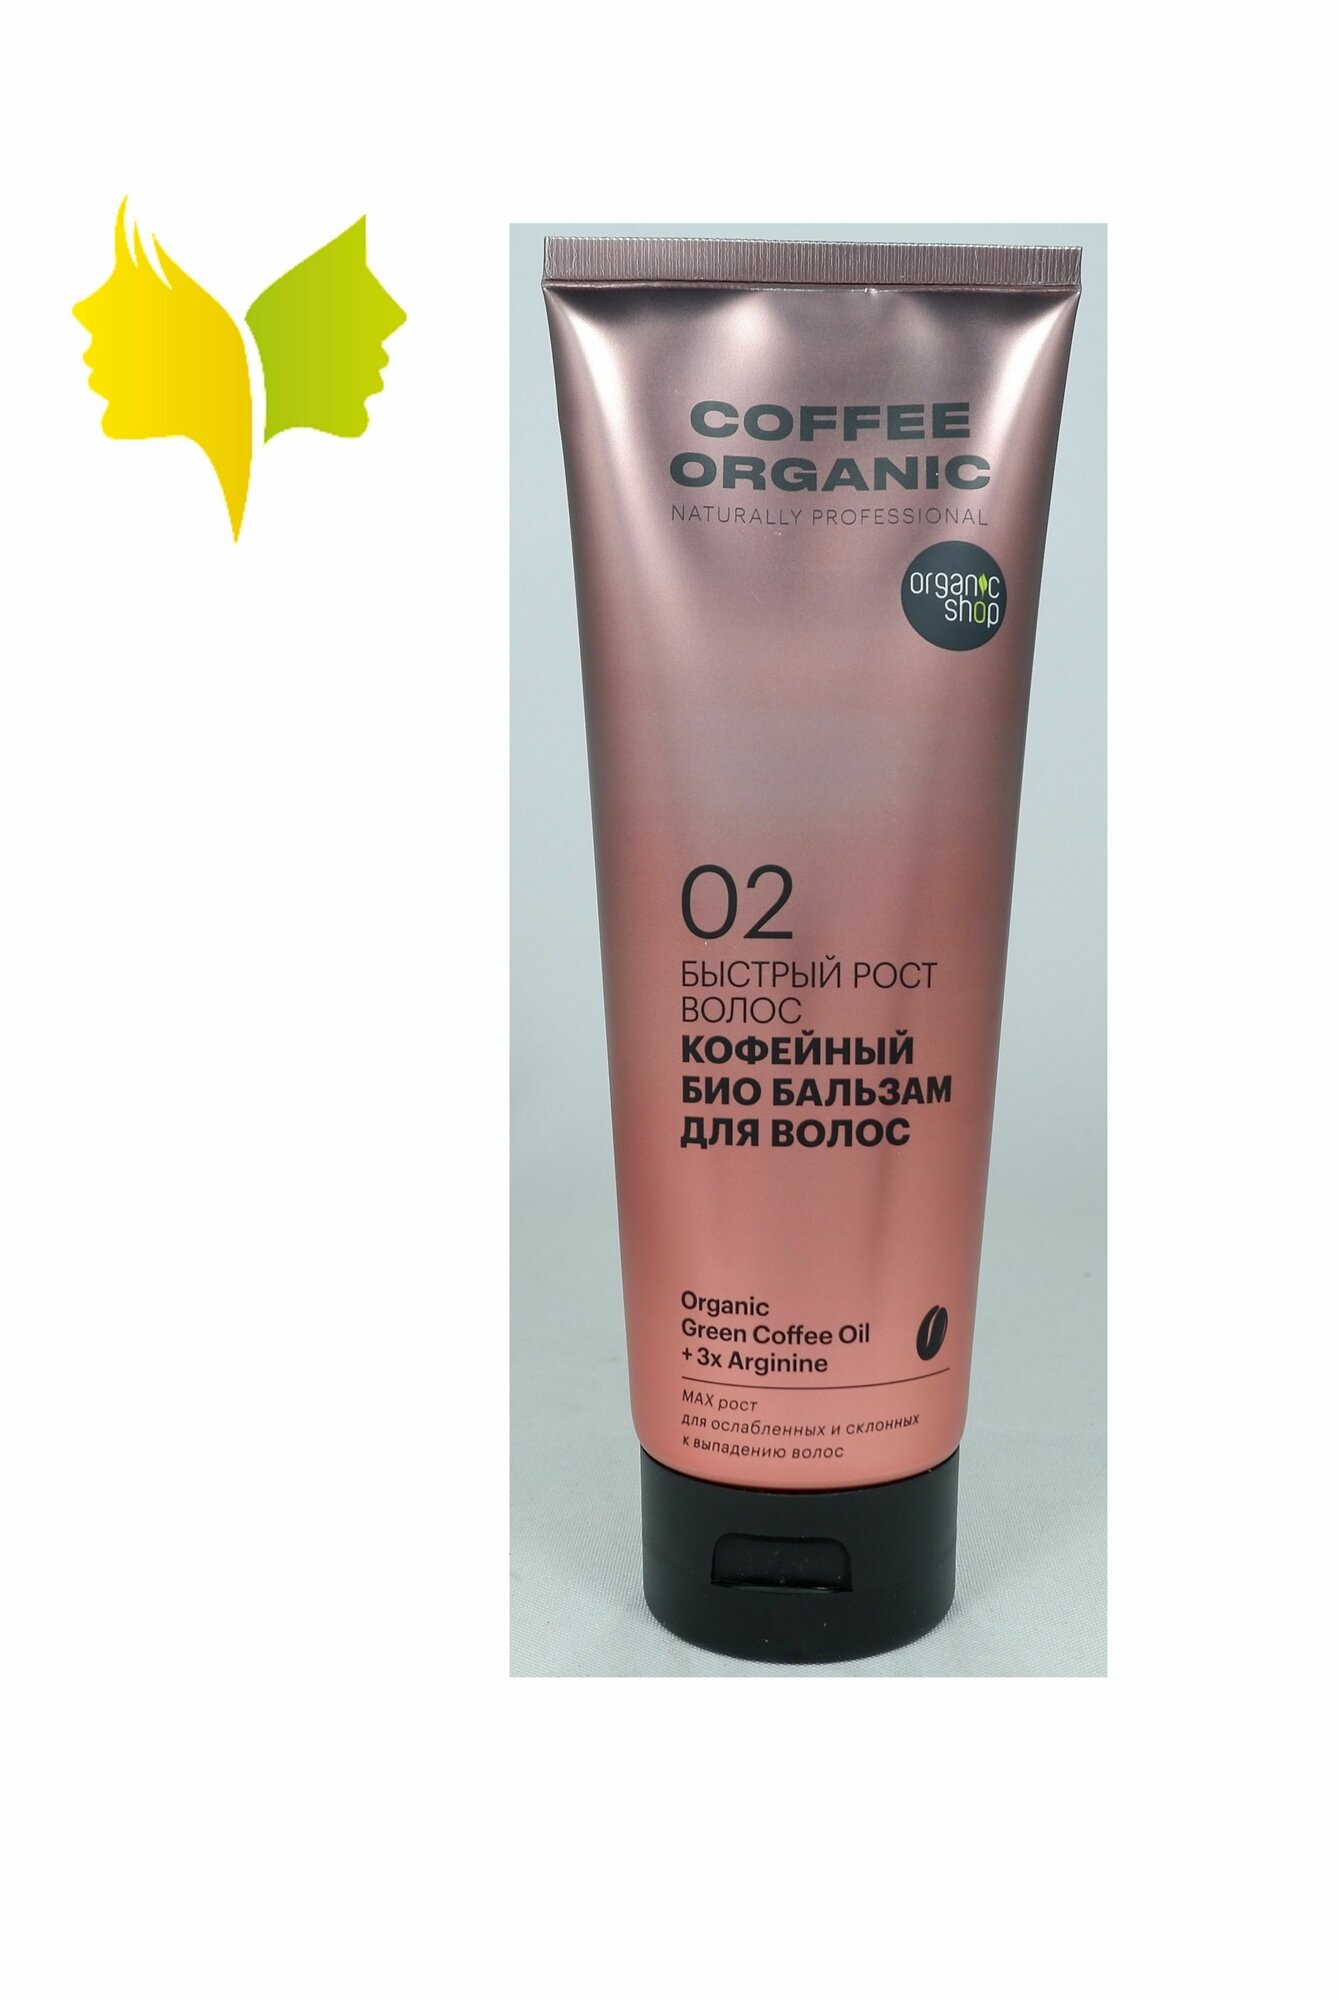 Coffee / Био бальзам для волос "Быстрый рост", 250 мл